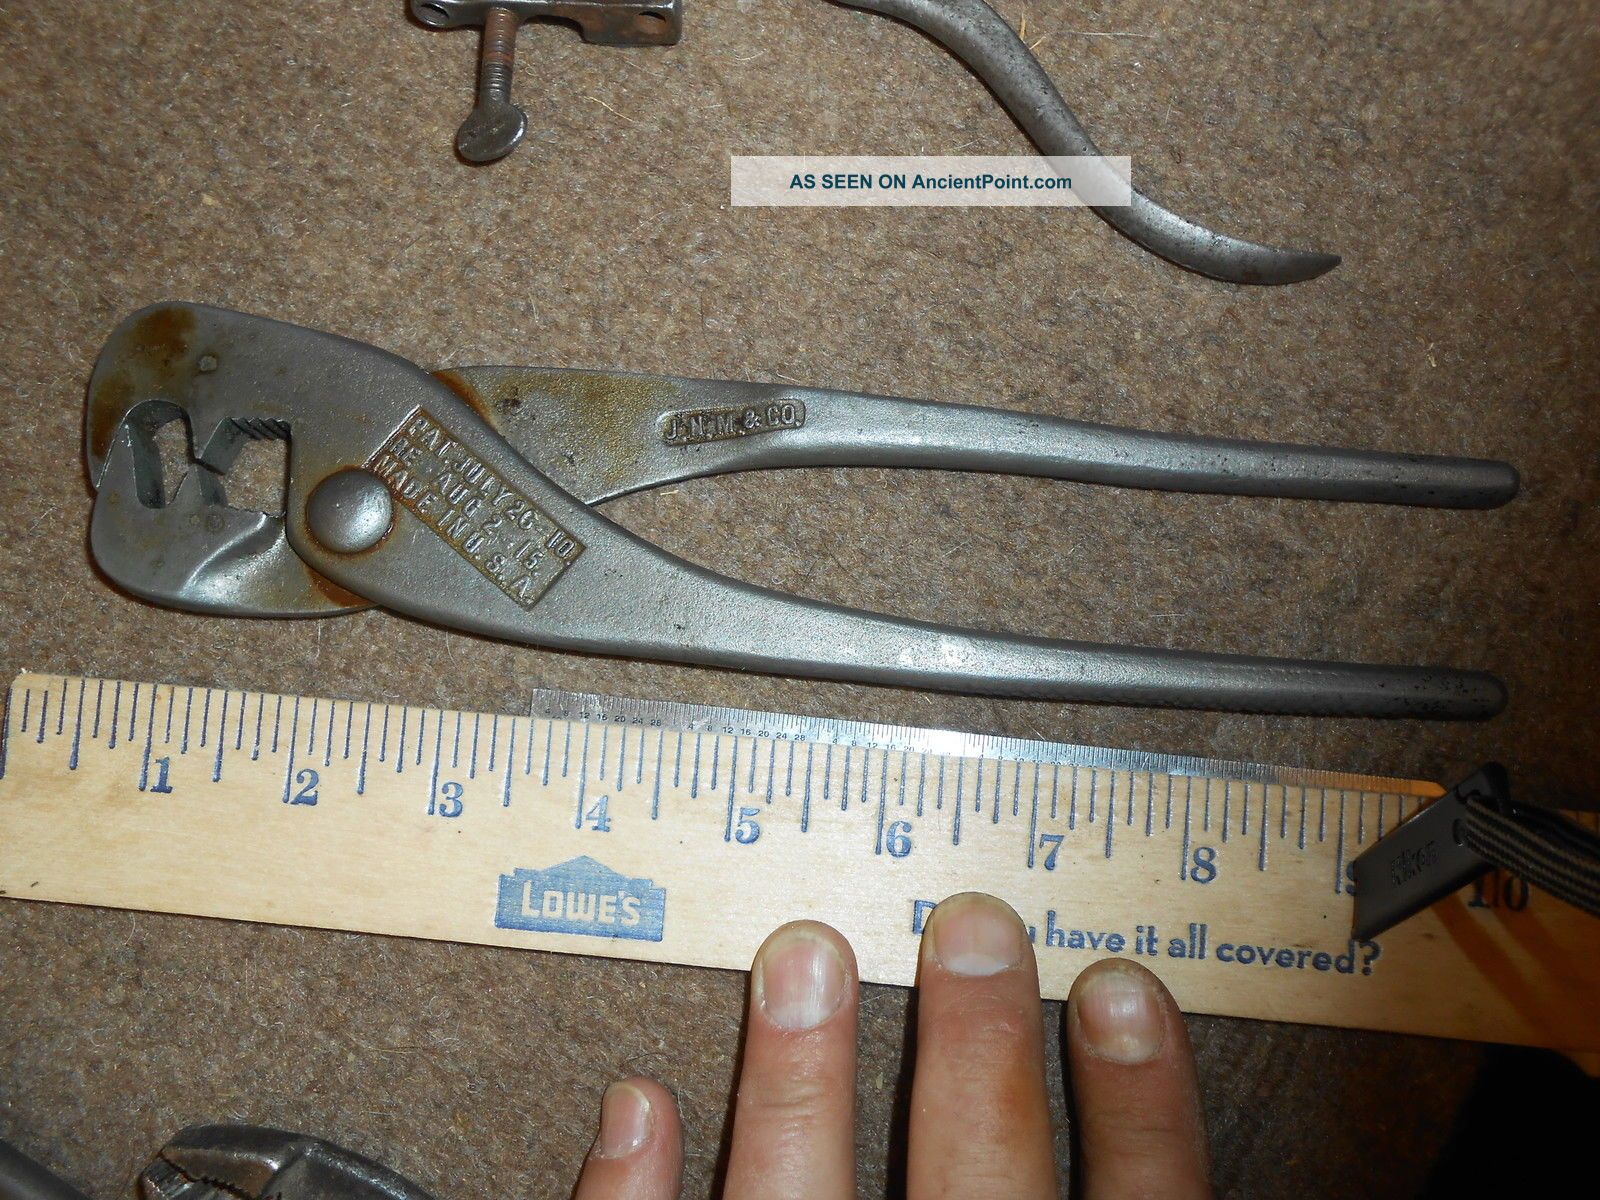 Vtg Tool Chain Repair Pliers Plyers J N M & Co J N Macdonald Pat 1910 - 1915 Other photo